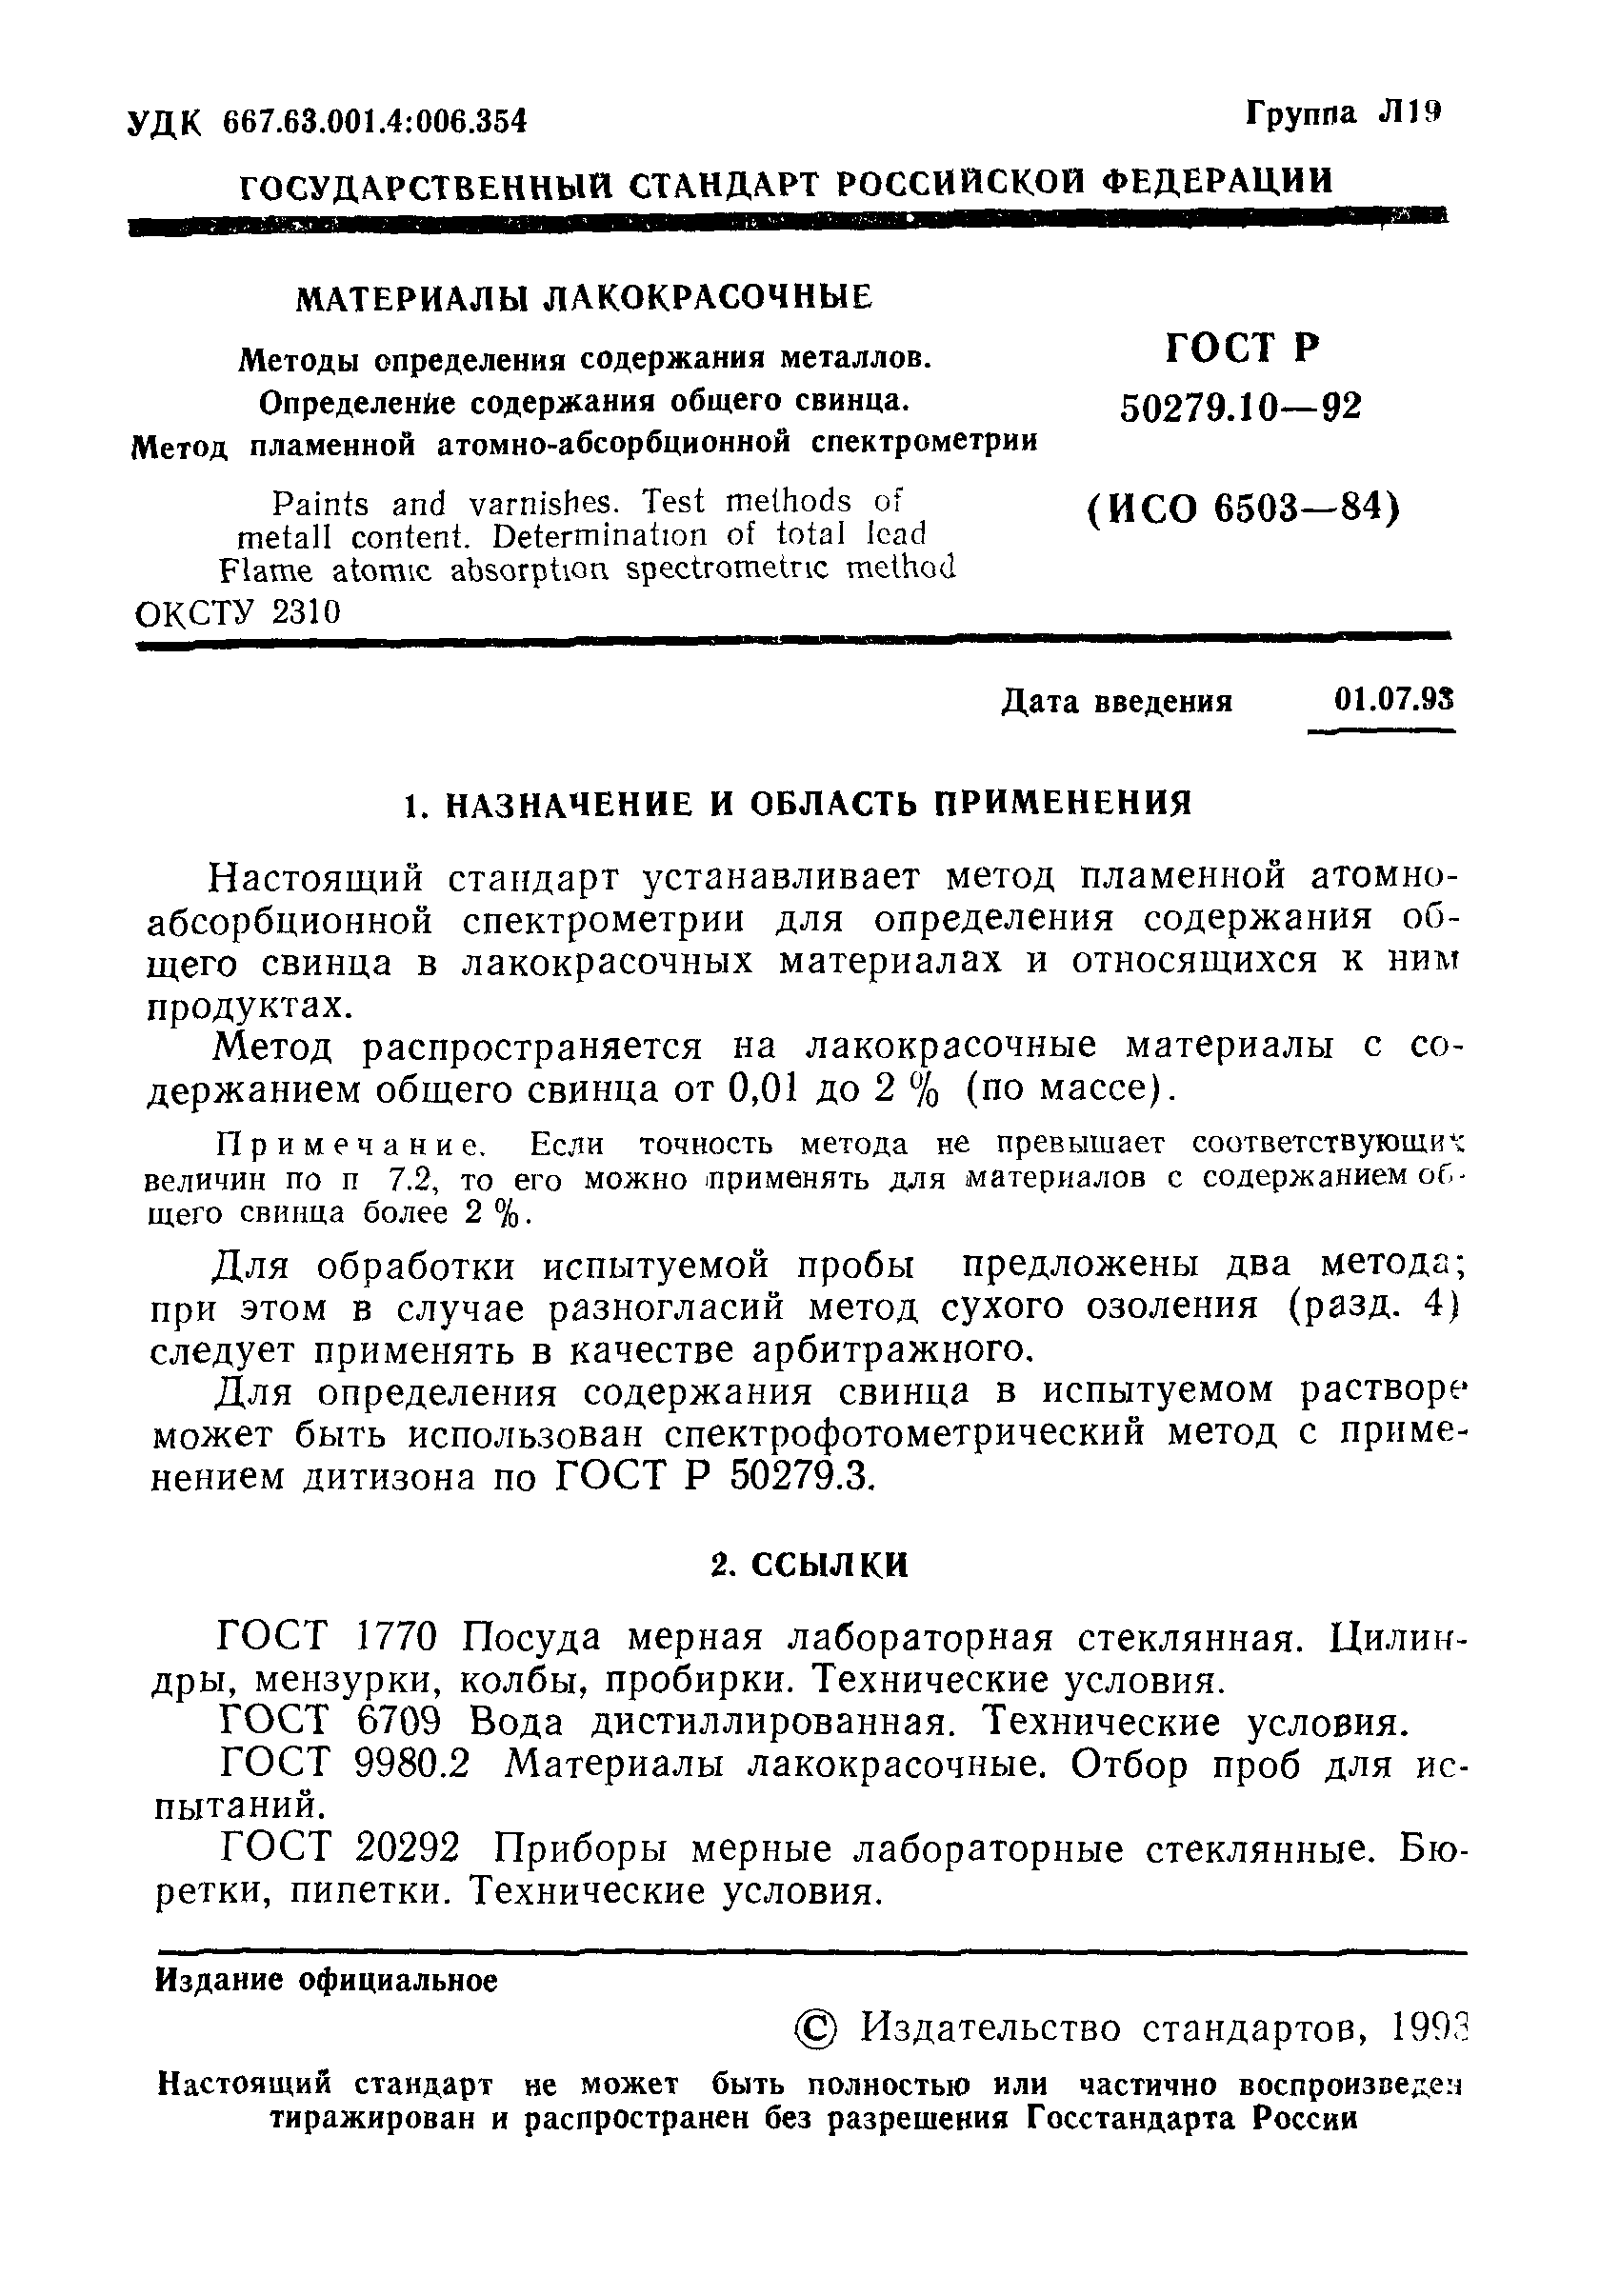 ГОСТ Р 50279.10-92